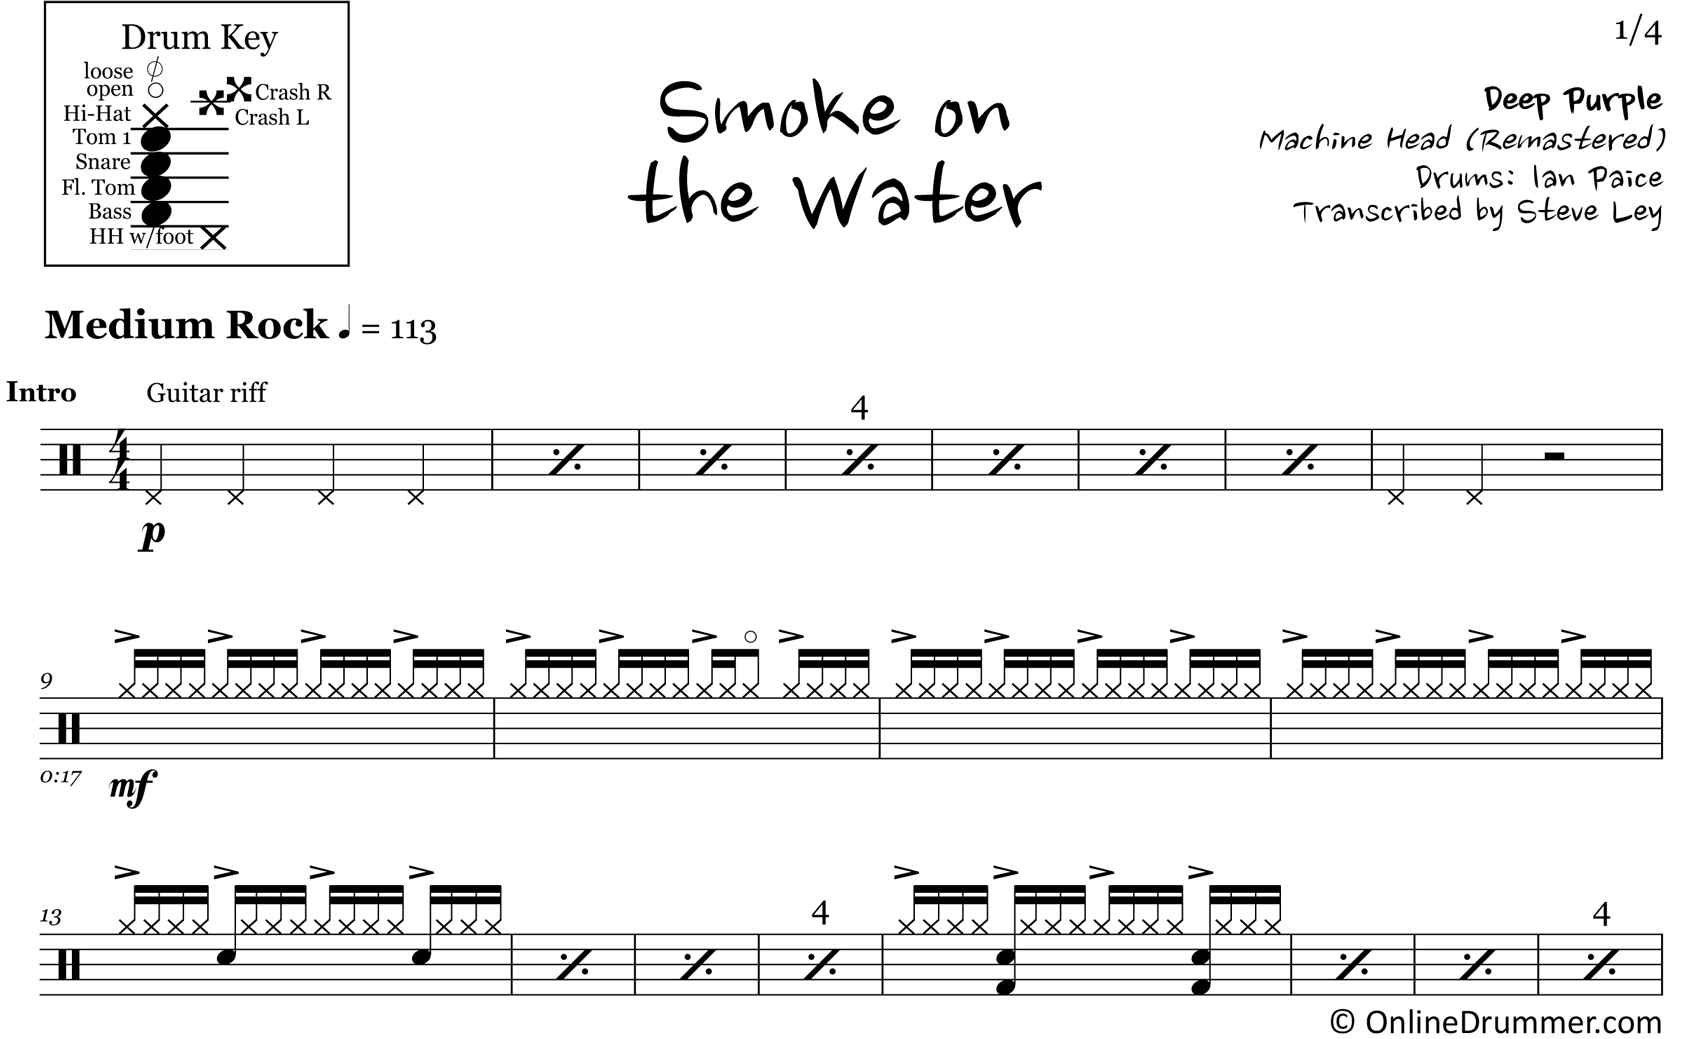 Смок он зе вота. Ноты для барабанов Smoke on the Water. Ноты Deep Purple Smoke. Deep Purple Smoke on the Water Ноты для барабанов. Дым над водой Ноты для барабанов.